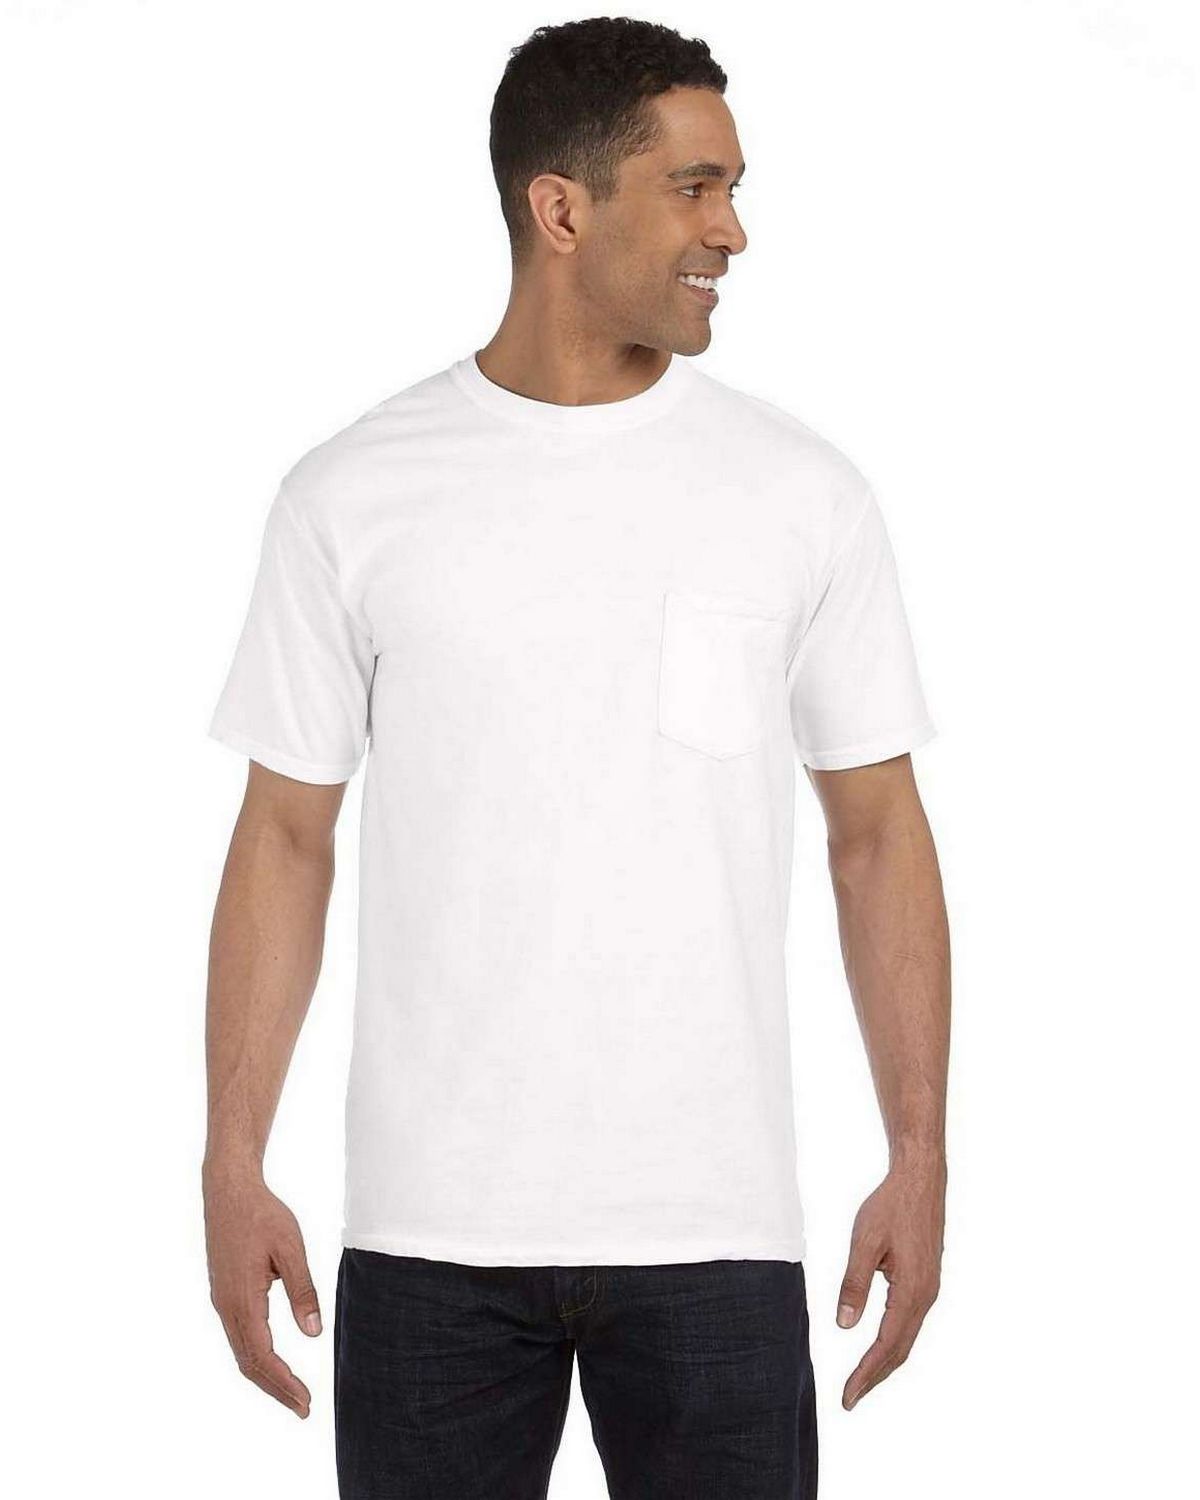 Comfort Colors 6030CC Garment Dyed Pocket T Shirt - ApparelnBags.com